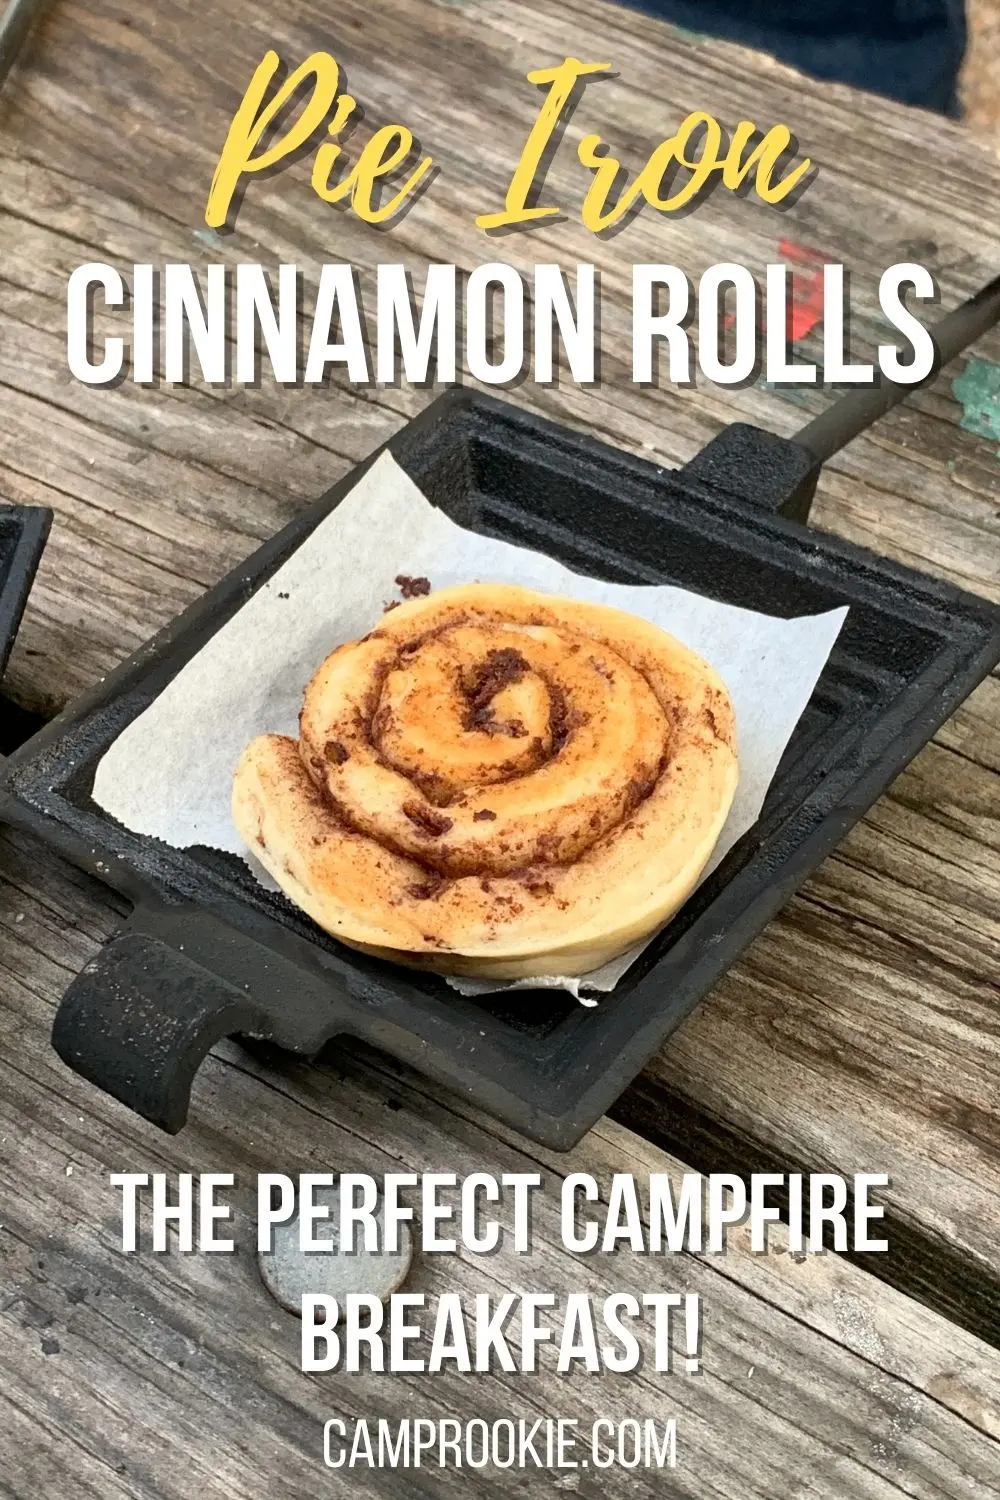 http://camprookie.com/wp-content/uploads/2021/04/pie-iron-cinnamon-rolls-pin-image.jpg.webp